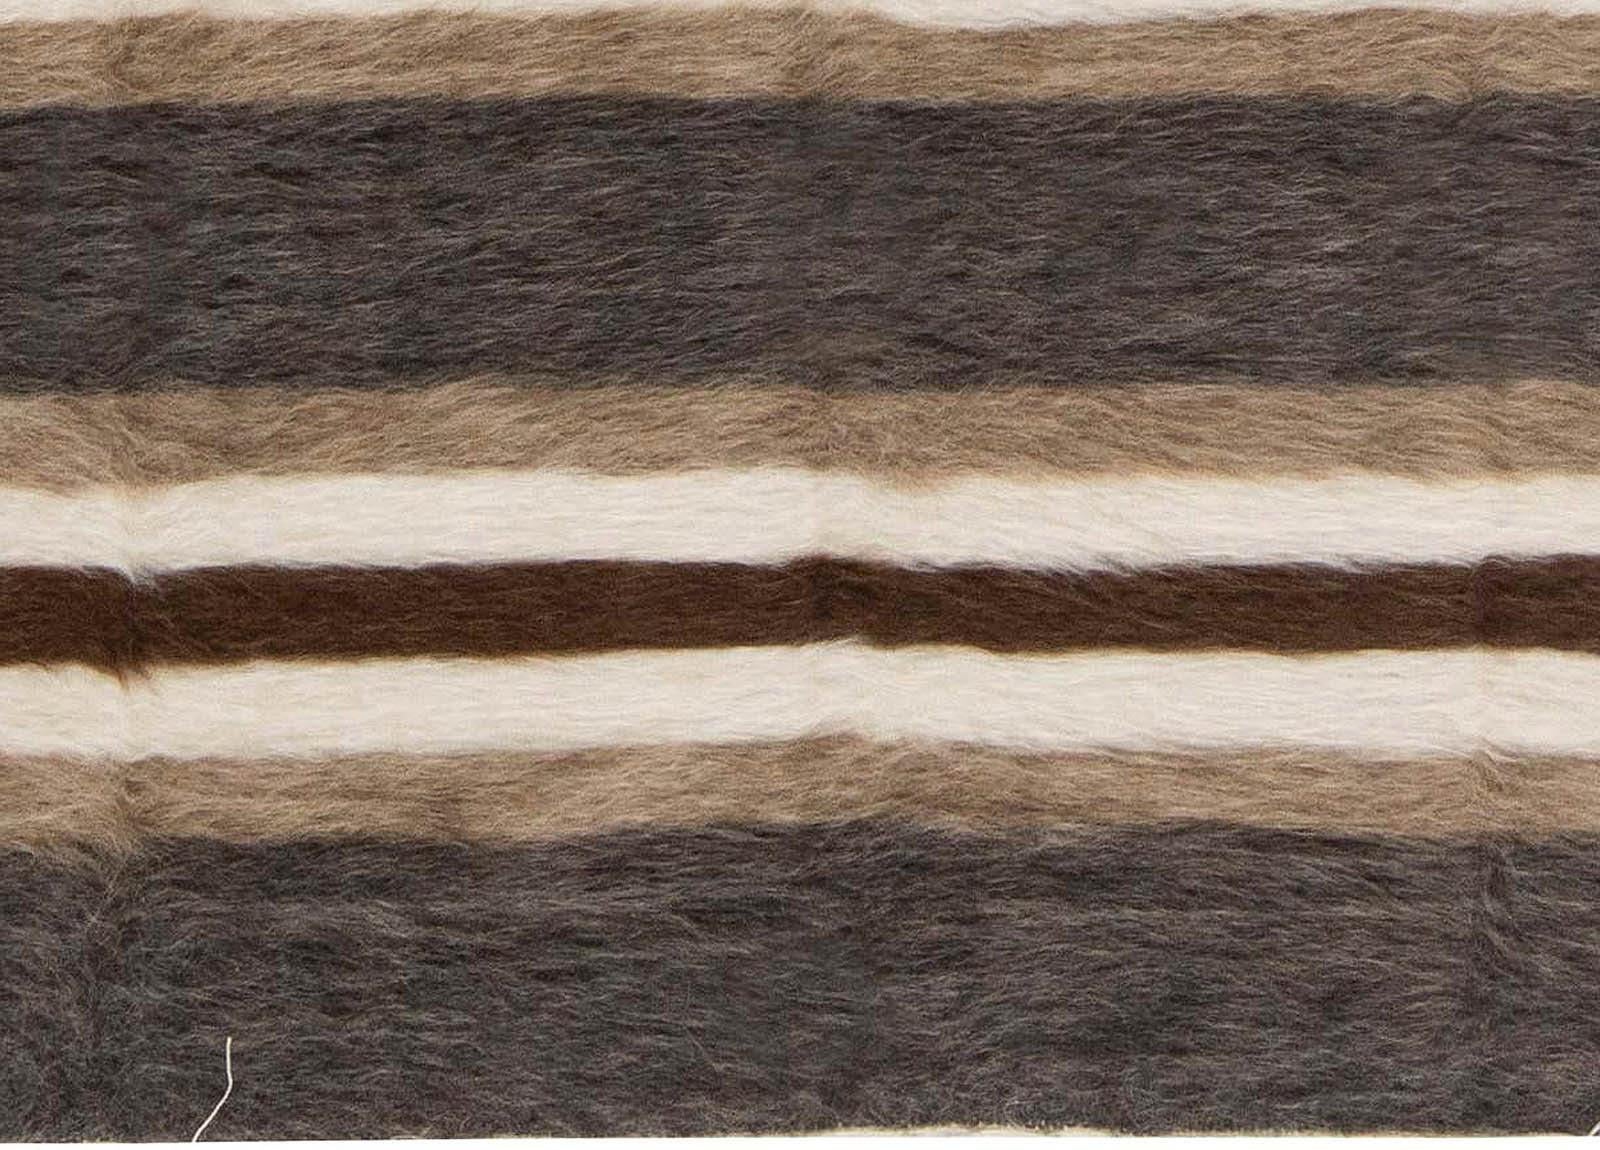 Taurus collection striped brown, white, grey, goat hair rug by Doris Leslie Blau.
Size: 4.0